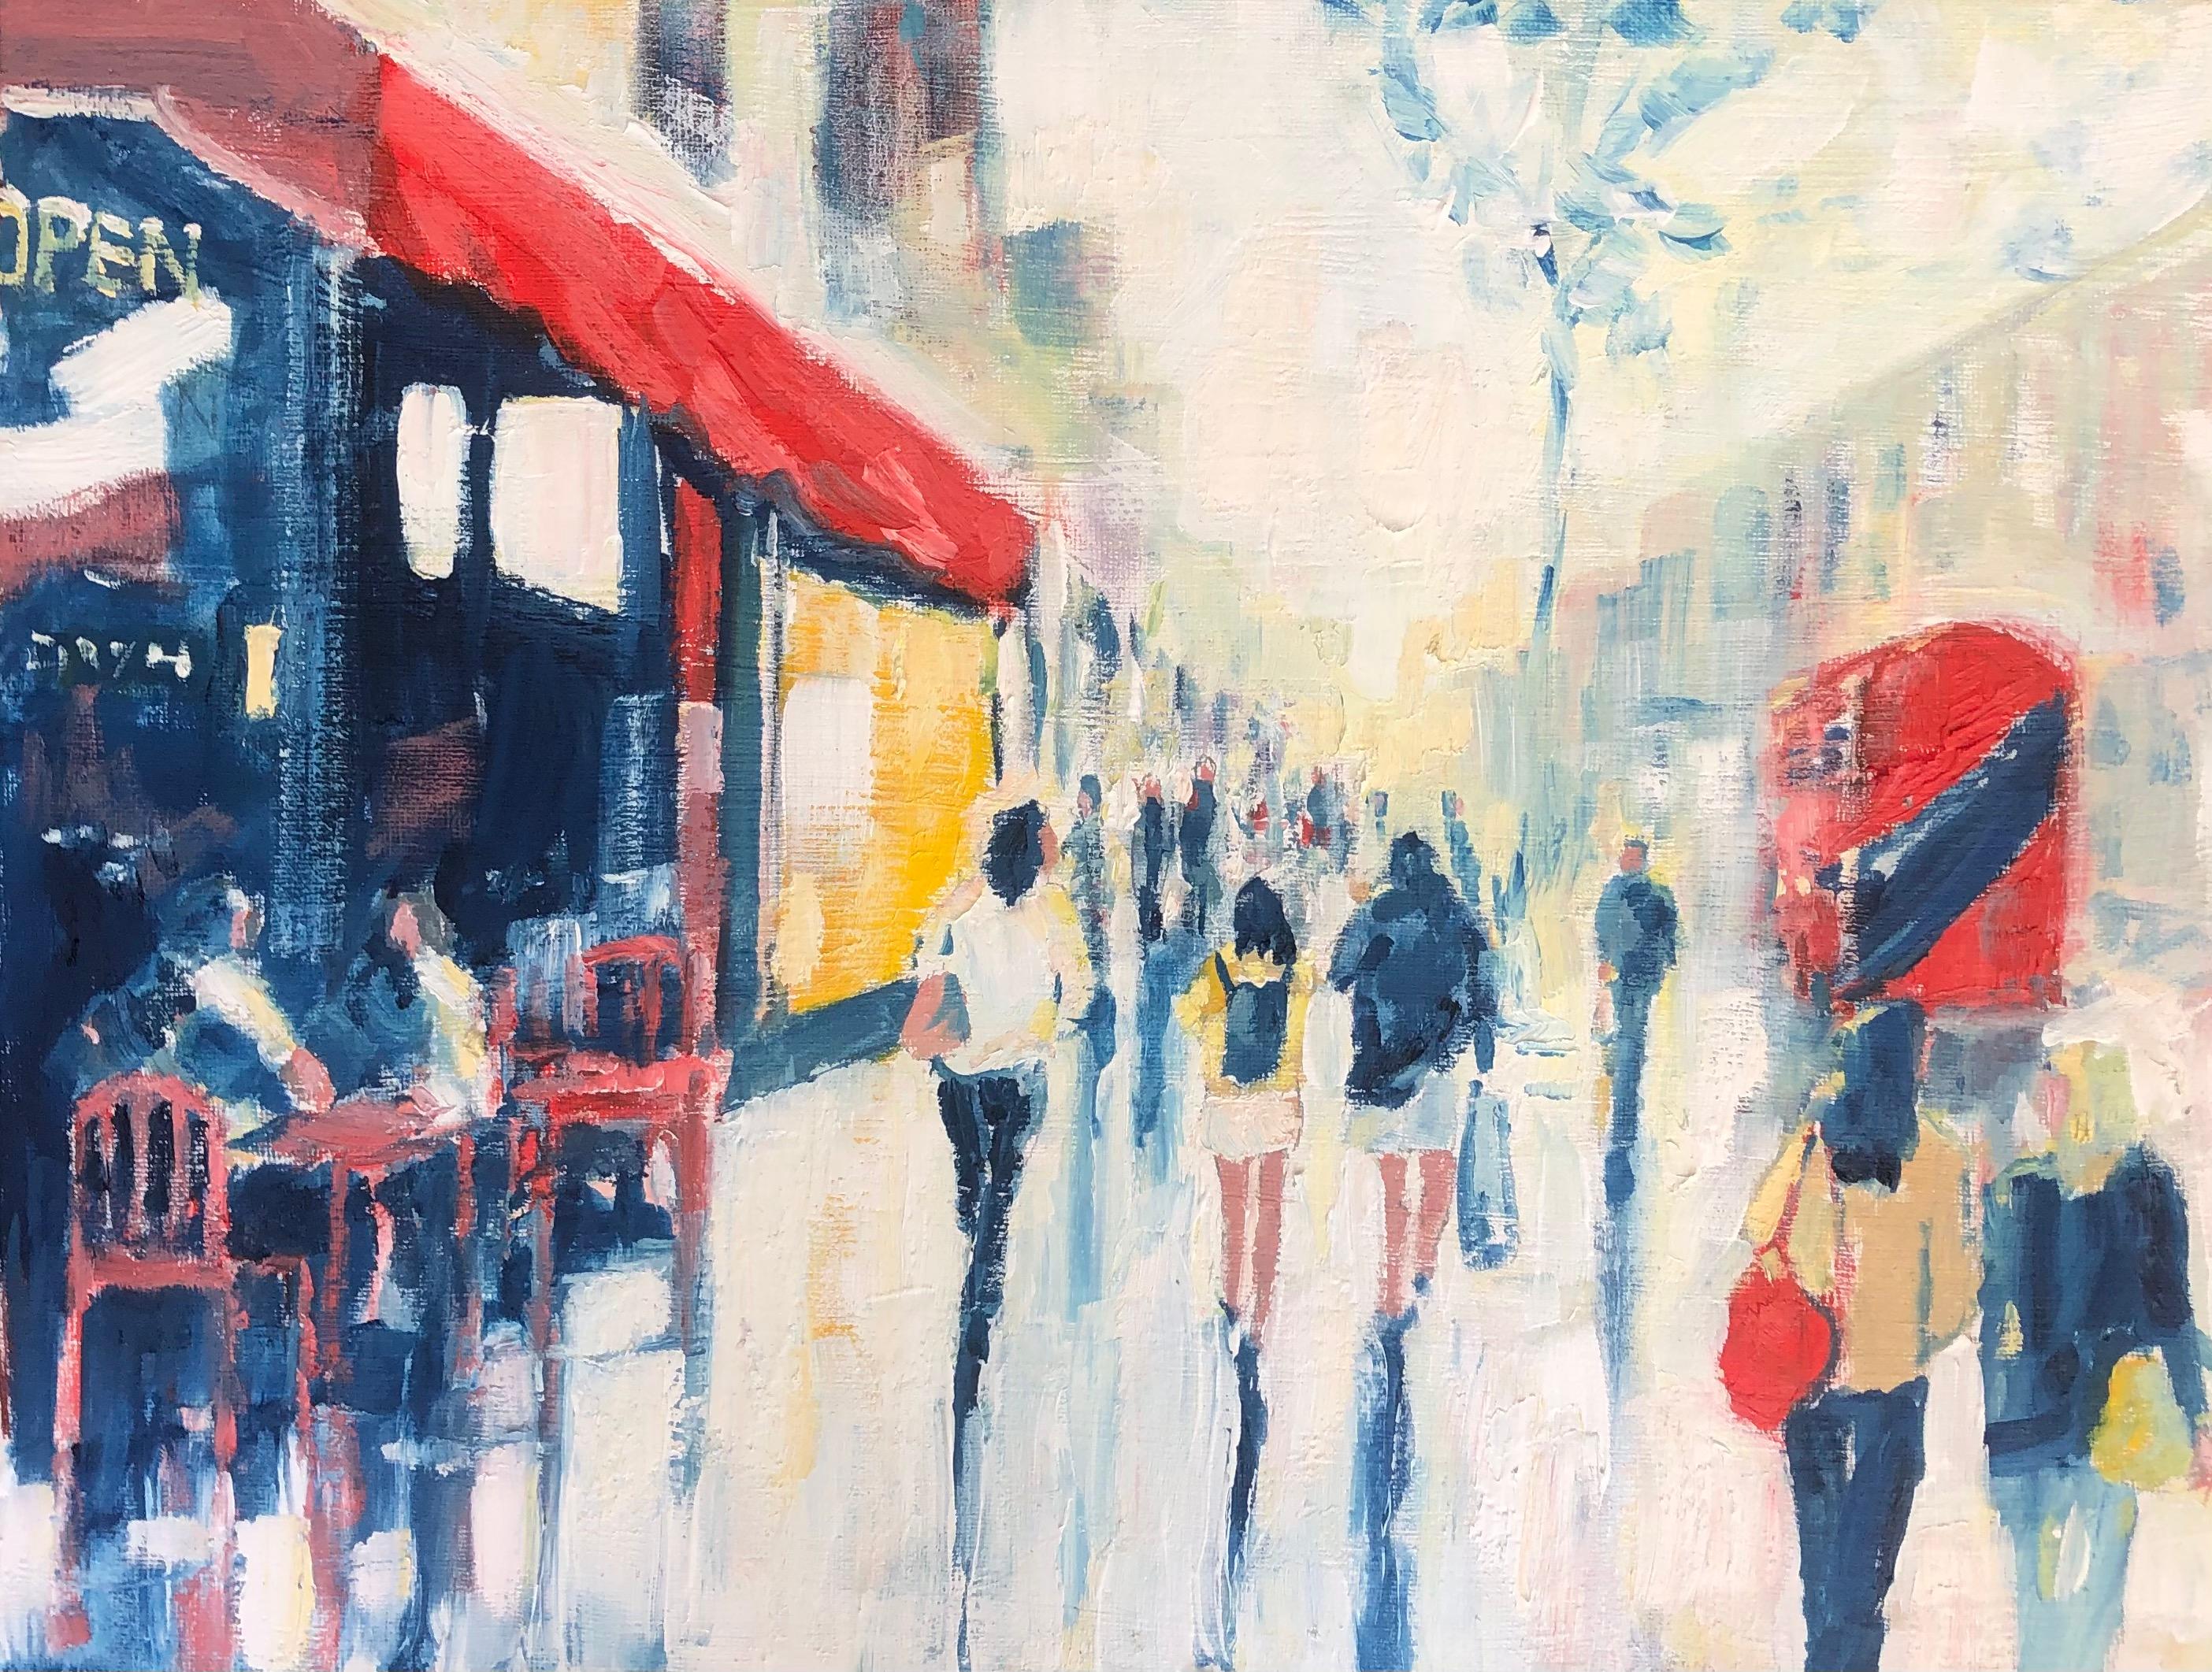 Street Life, Chelsea - impressionnisme original - peinture figurative de paysage urbain - Art